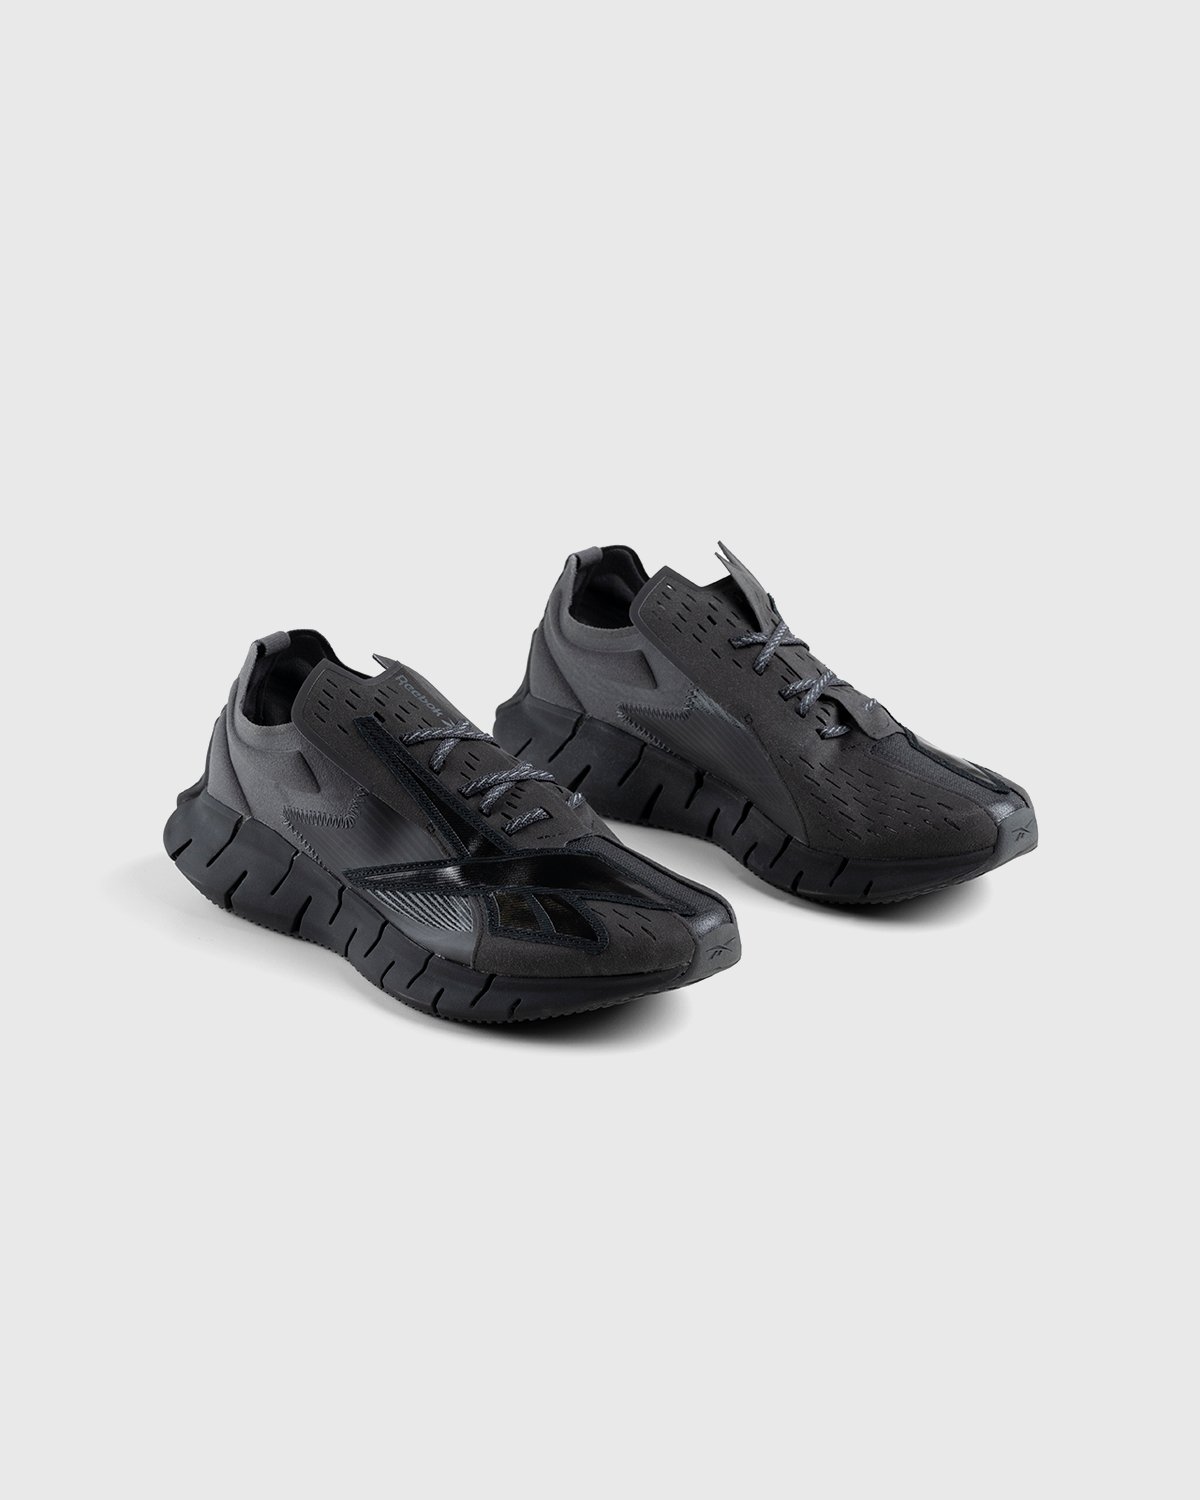 Reebok x Maison Margiela - Zig 3D Storm Memory Of Black - Footwear - Black - Image 4